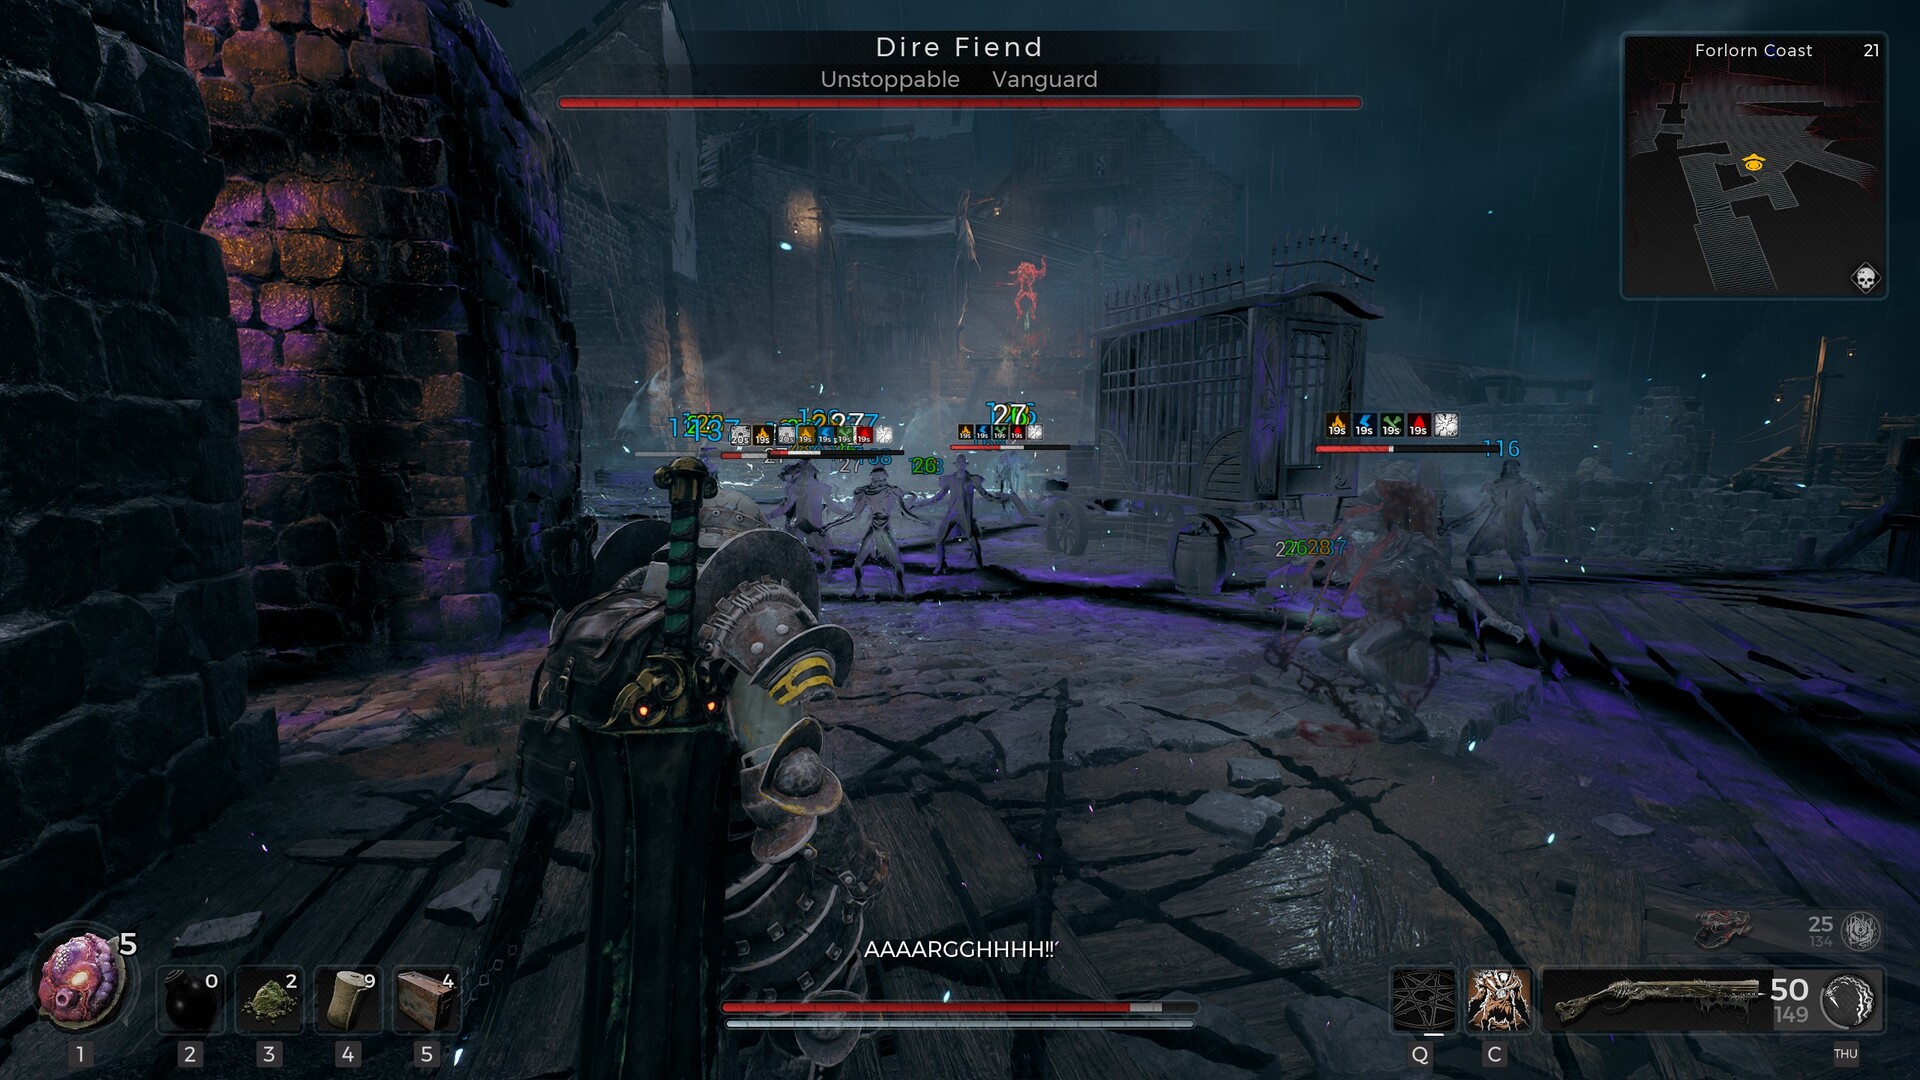 Captura de pantalla de Remnant 2 del jugador usando habilidades ritualistas